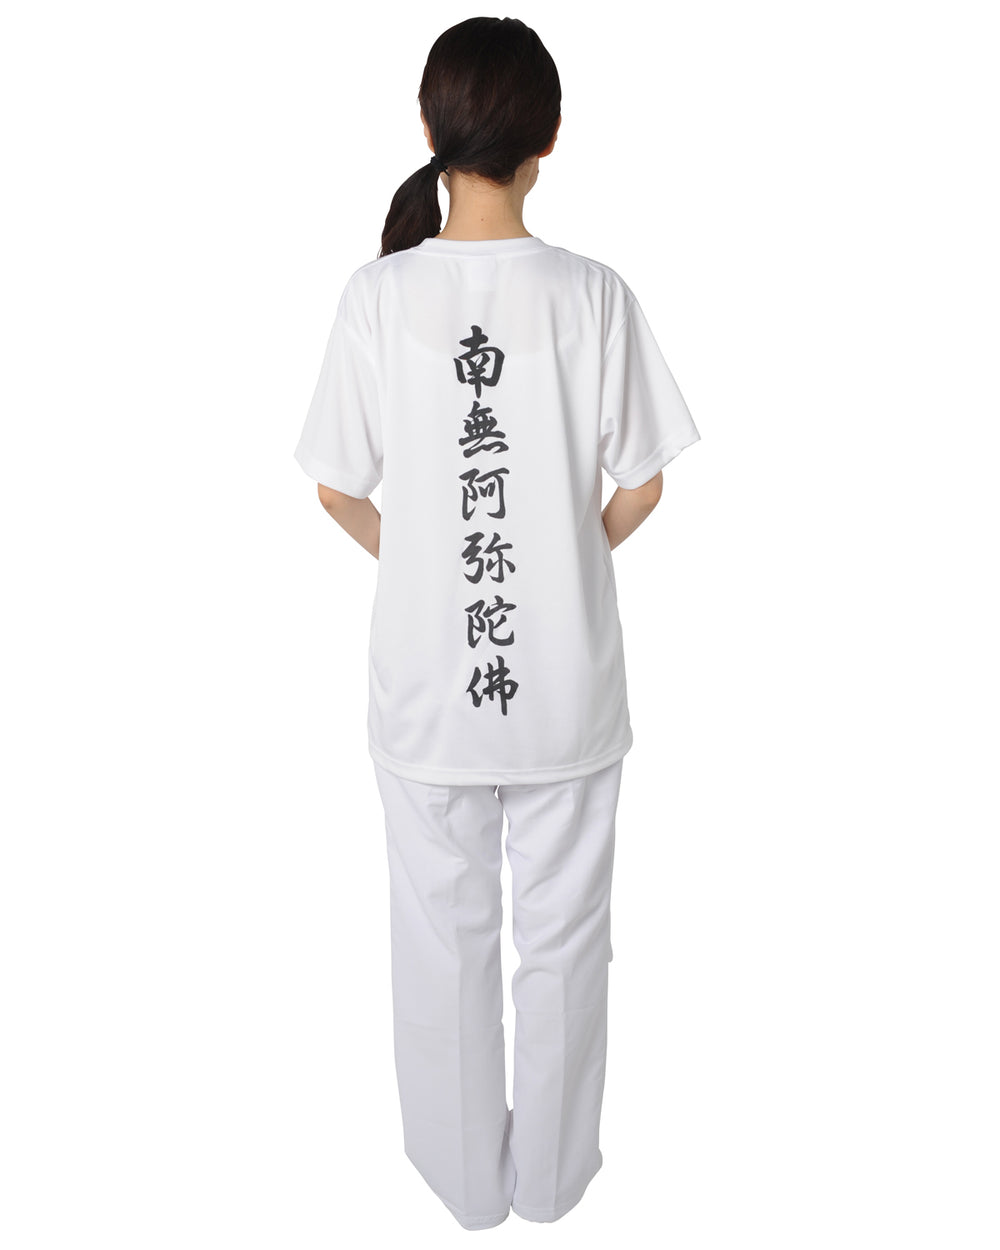 IPPO-IPPO-DO Pilgrimage T-shirt with Printed Phrases on the Back (Namu Amida Butsu/南無阿弥陀仏)